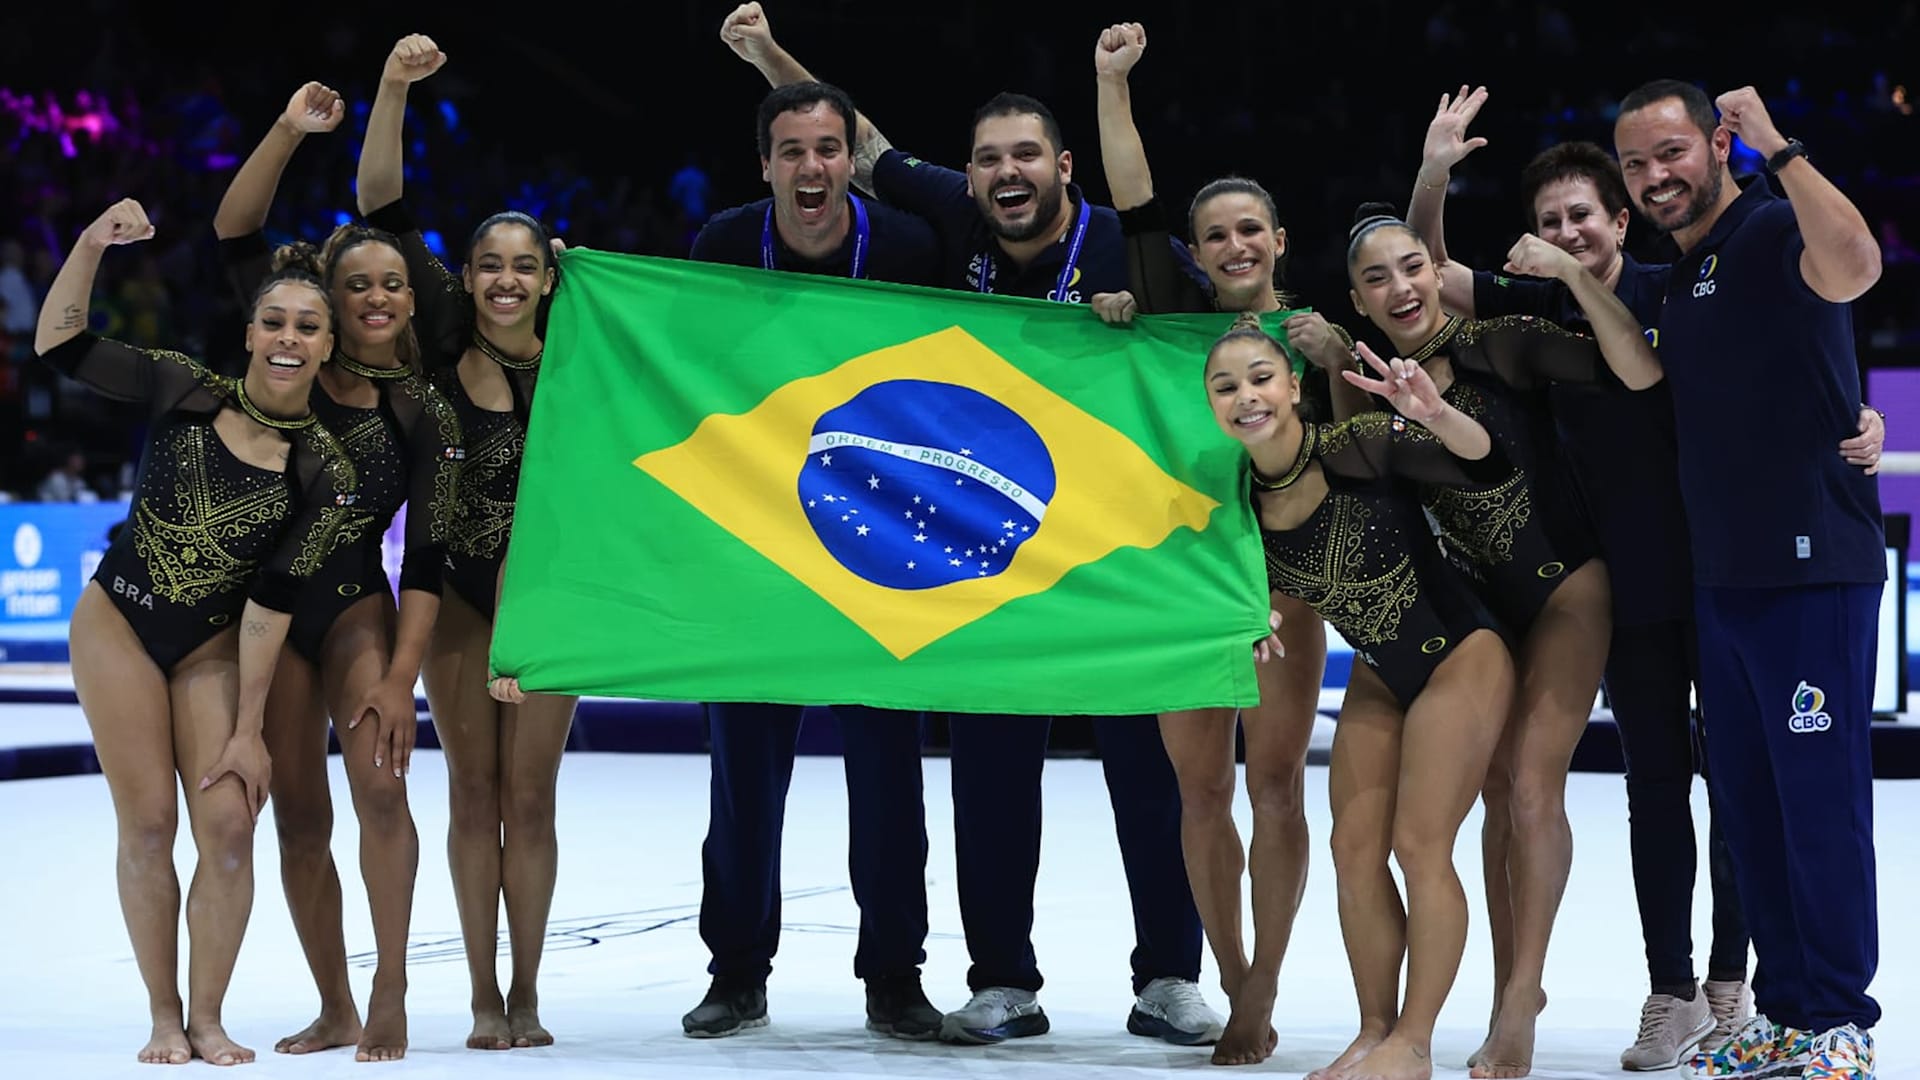 Canal Olímpico do Brasil transmite ao vivo, nesta segunda-feira